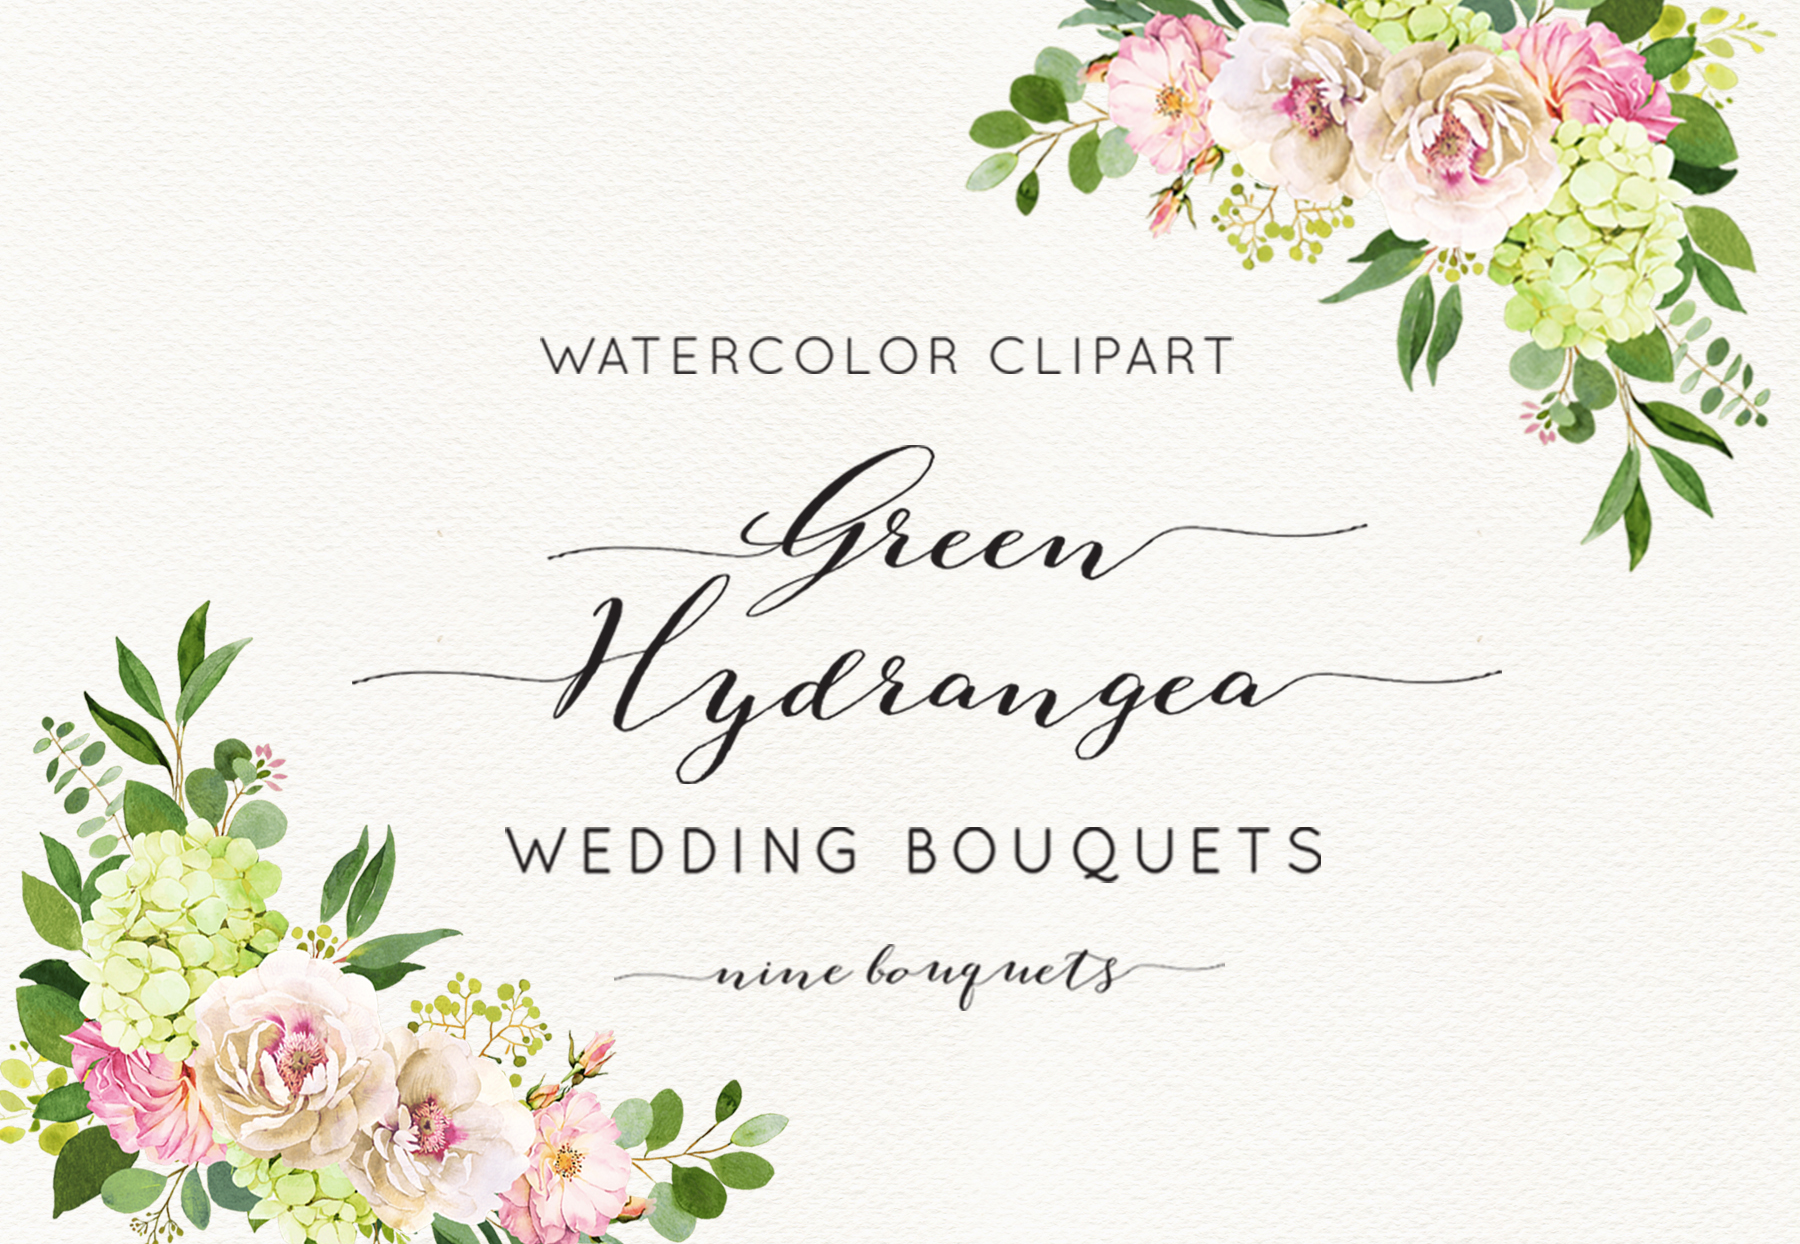 Green Hydrangea Wedding Bouquets